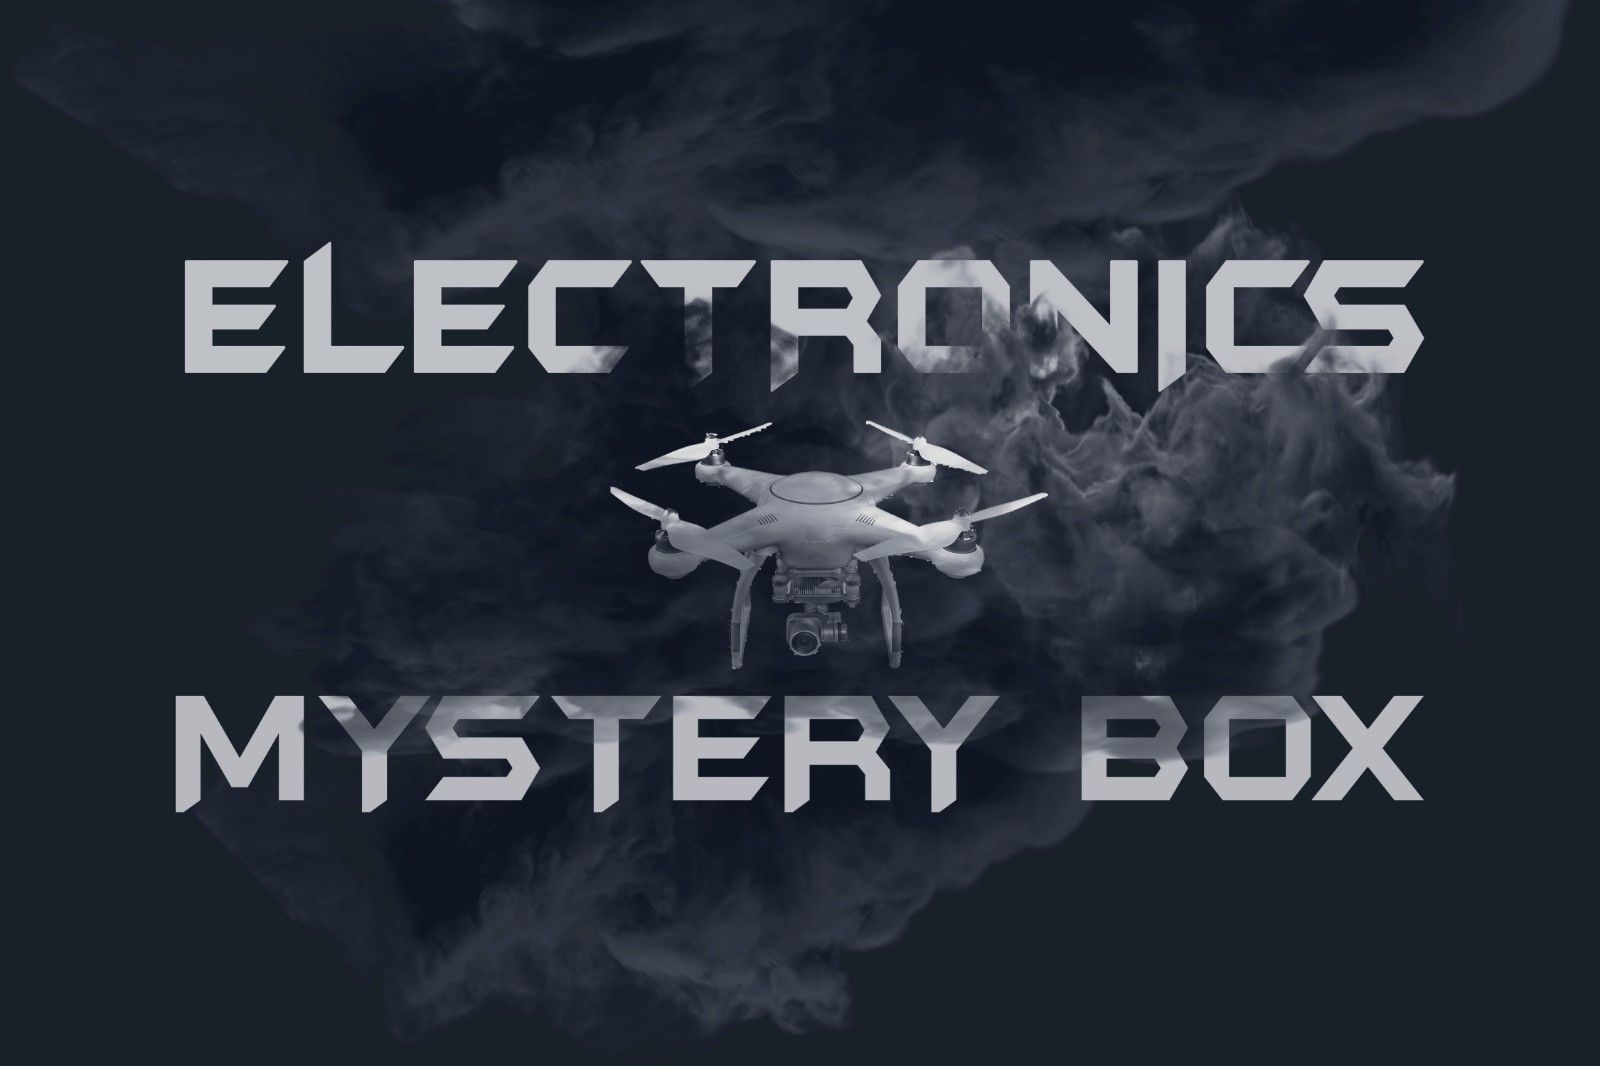 mystery box, electronic mystery box, vr mystery box, drones mystery box, drone, drones, vr, smart watch mystery box, smart watch, portable speakers mystery box